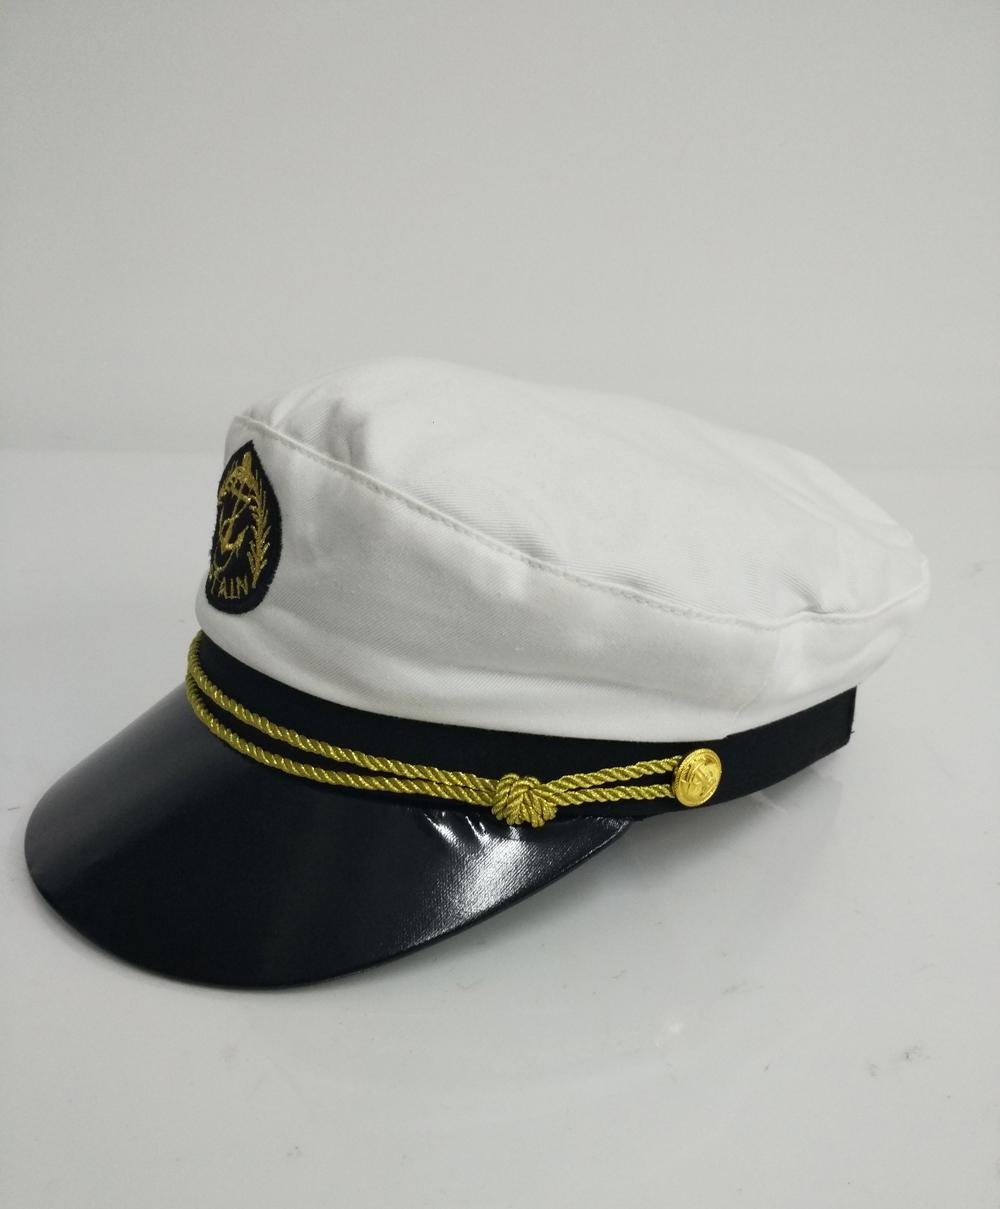  Military uniform police Amy officer peak caps 5